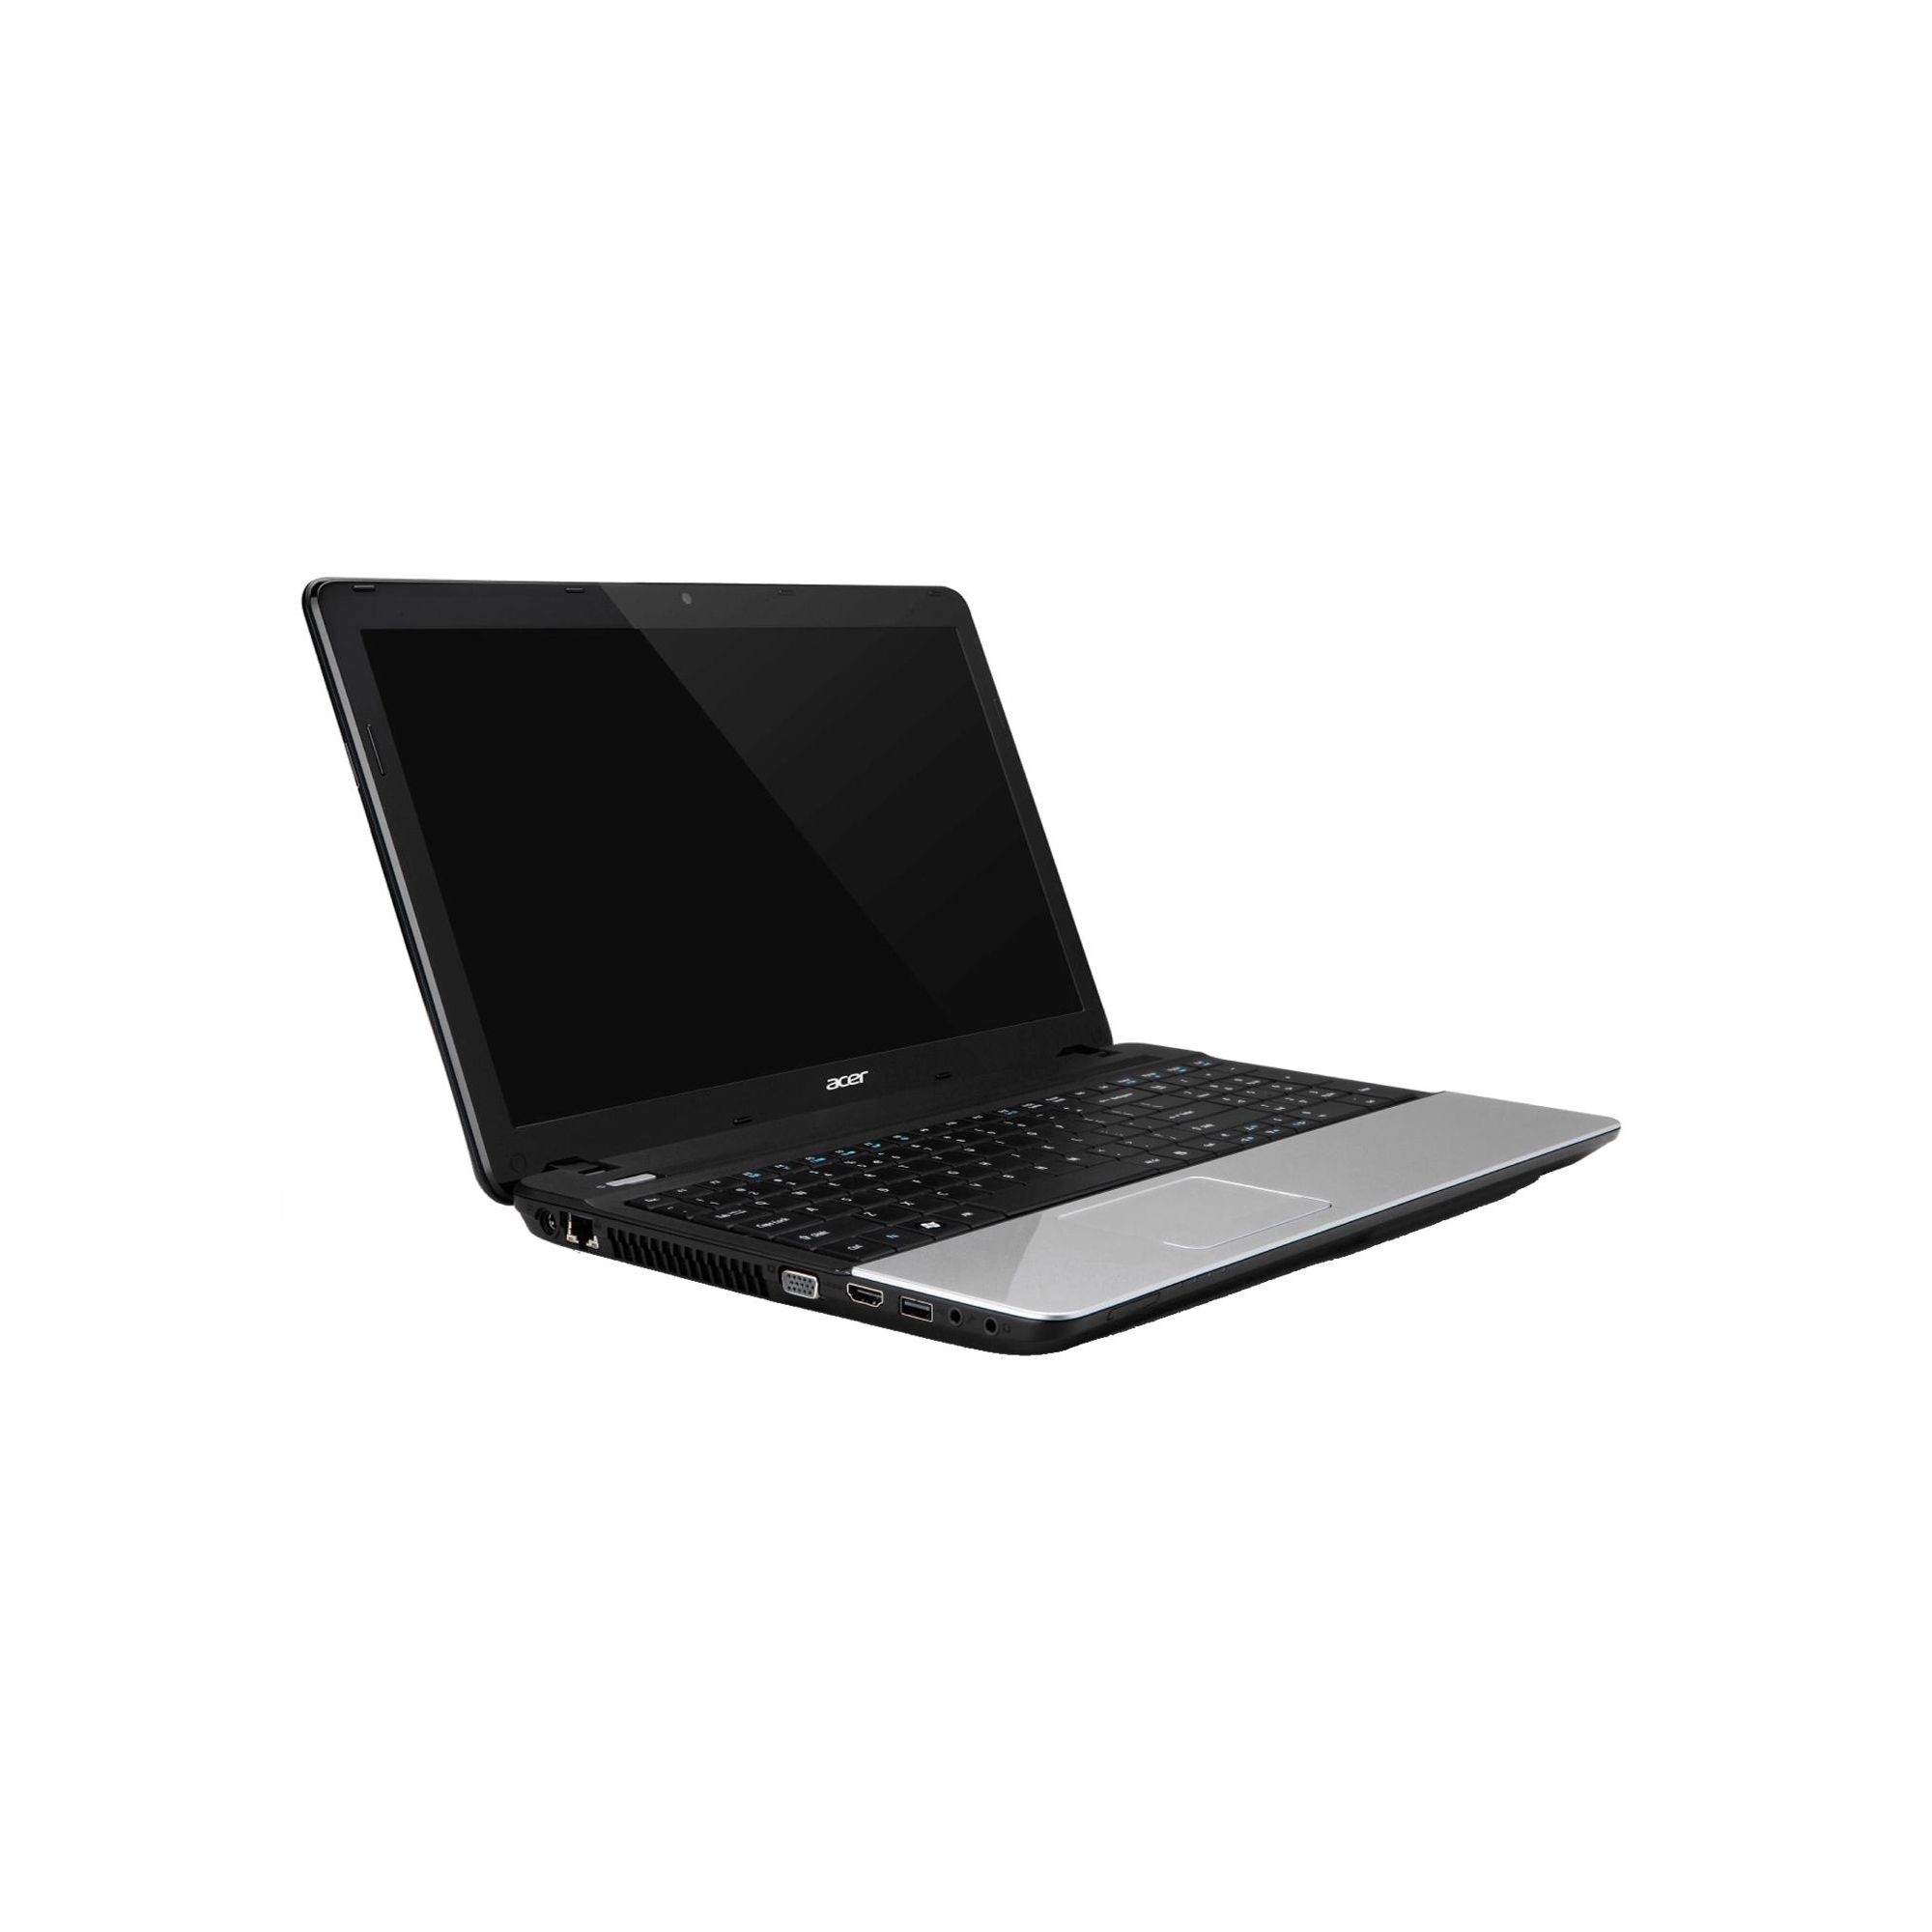 Acer Aspire E1-571-33114G50Mnks (15.6 inch) Notebook PC Core i3 (3110M) 2.4GHz 4GB 500GB DVD Writer WLAN Webcam Windows 8 64-bit (Intel GMA HD) at Tescos Direct